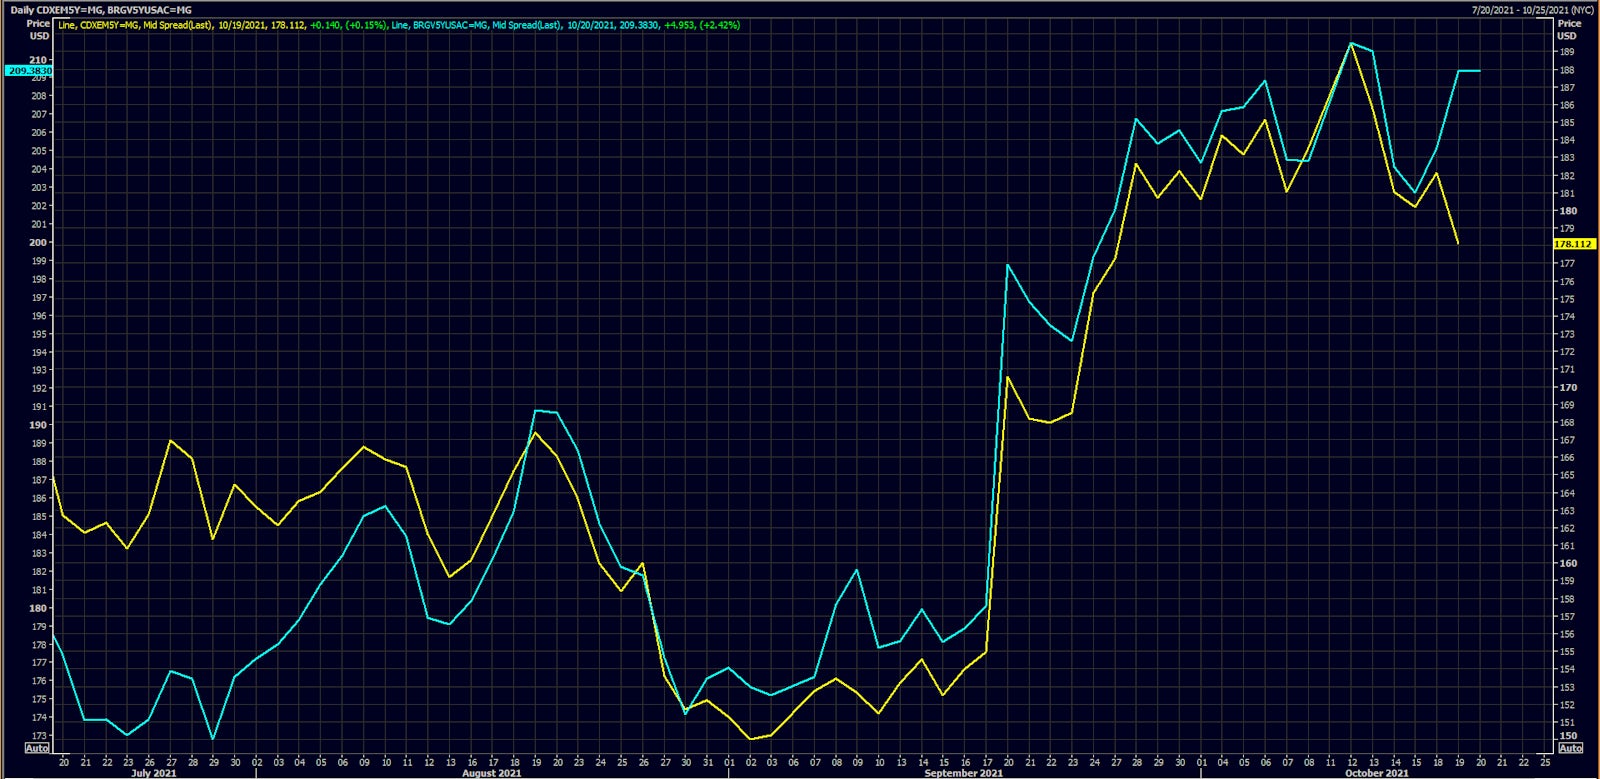 CDX EM 5Y USD Sovereign Credit Spread vs Brazilian Government 5Y USD CDS Spread  | Source: Refinitiv